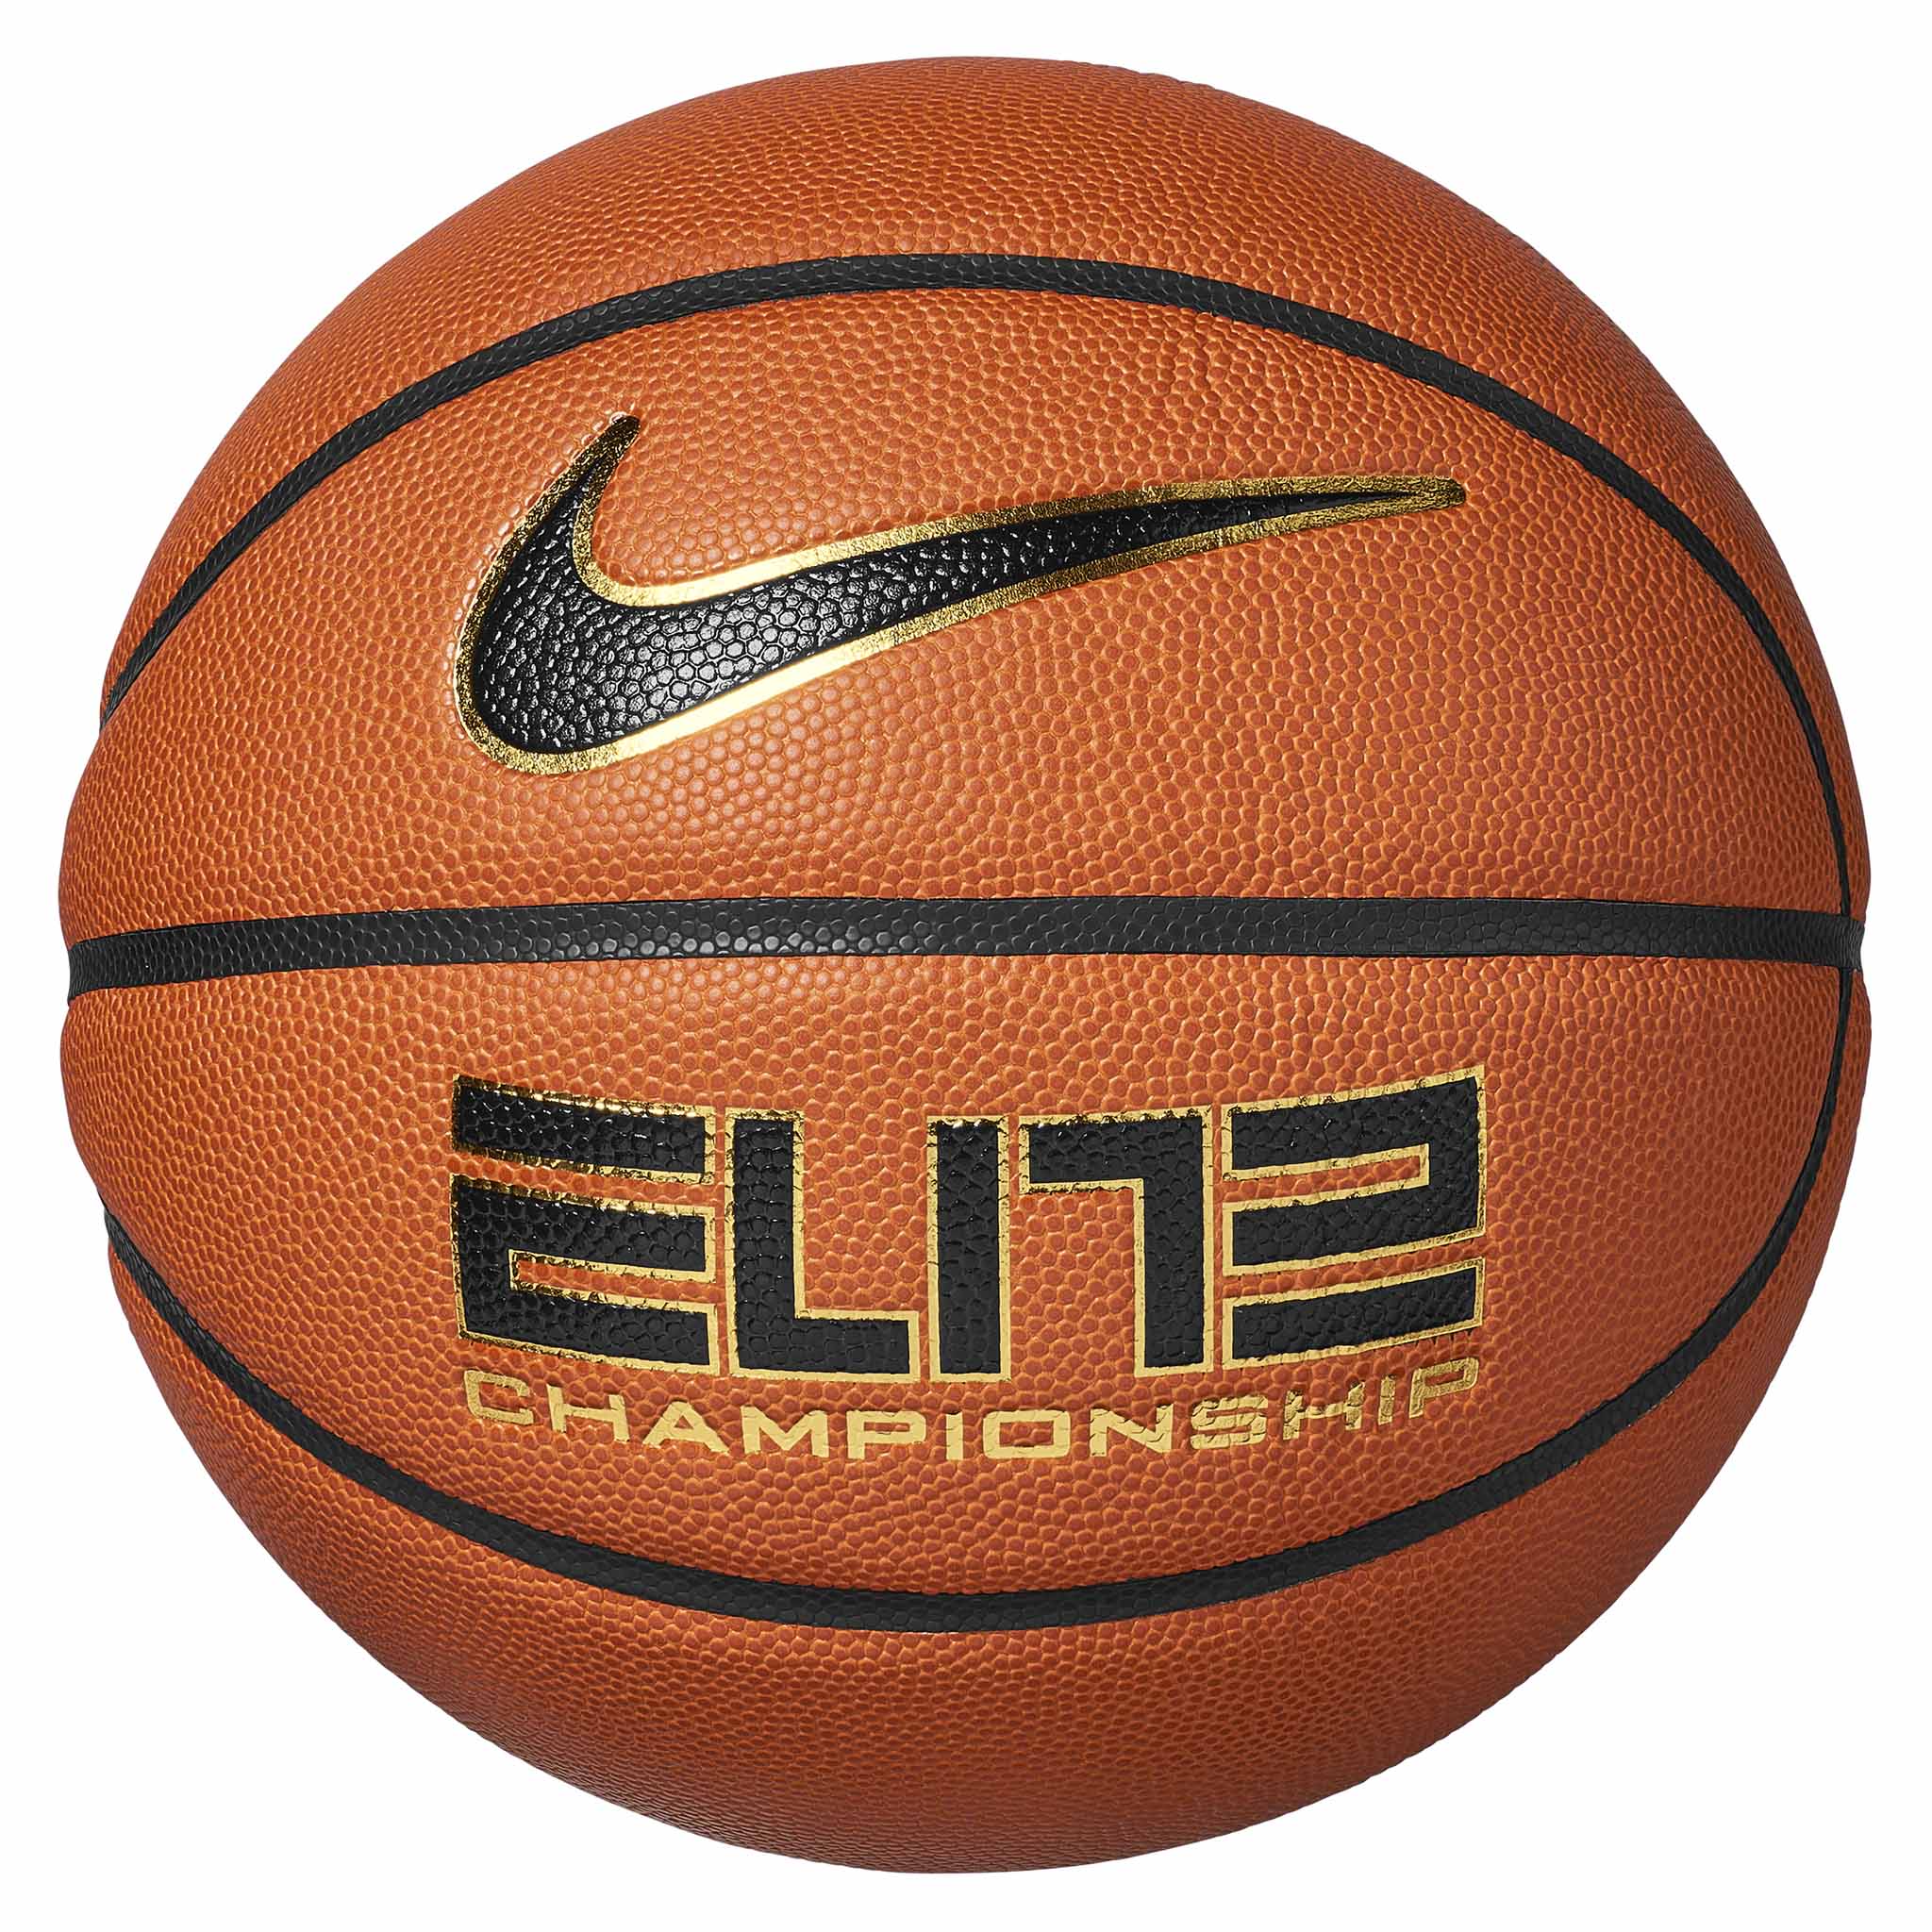 Bedankt Ongemak excuus Nike Elite Championship 8P 2.0 basketball - Soccer Sport Fitness